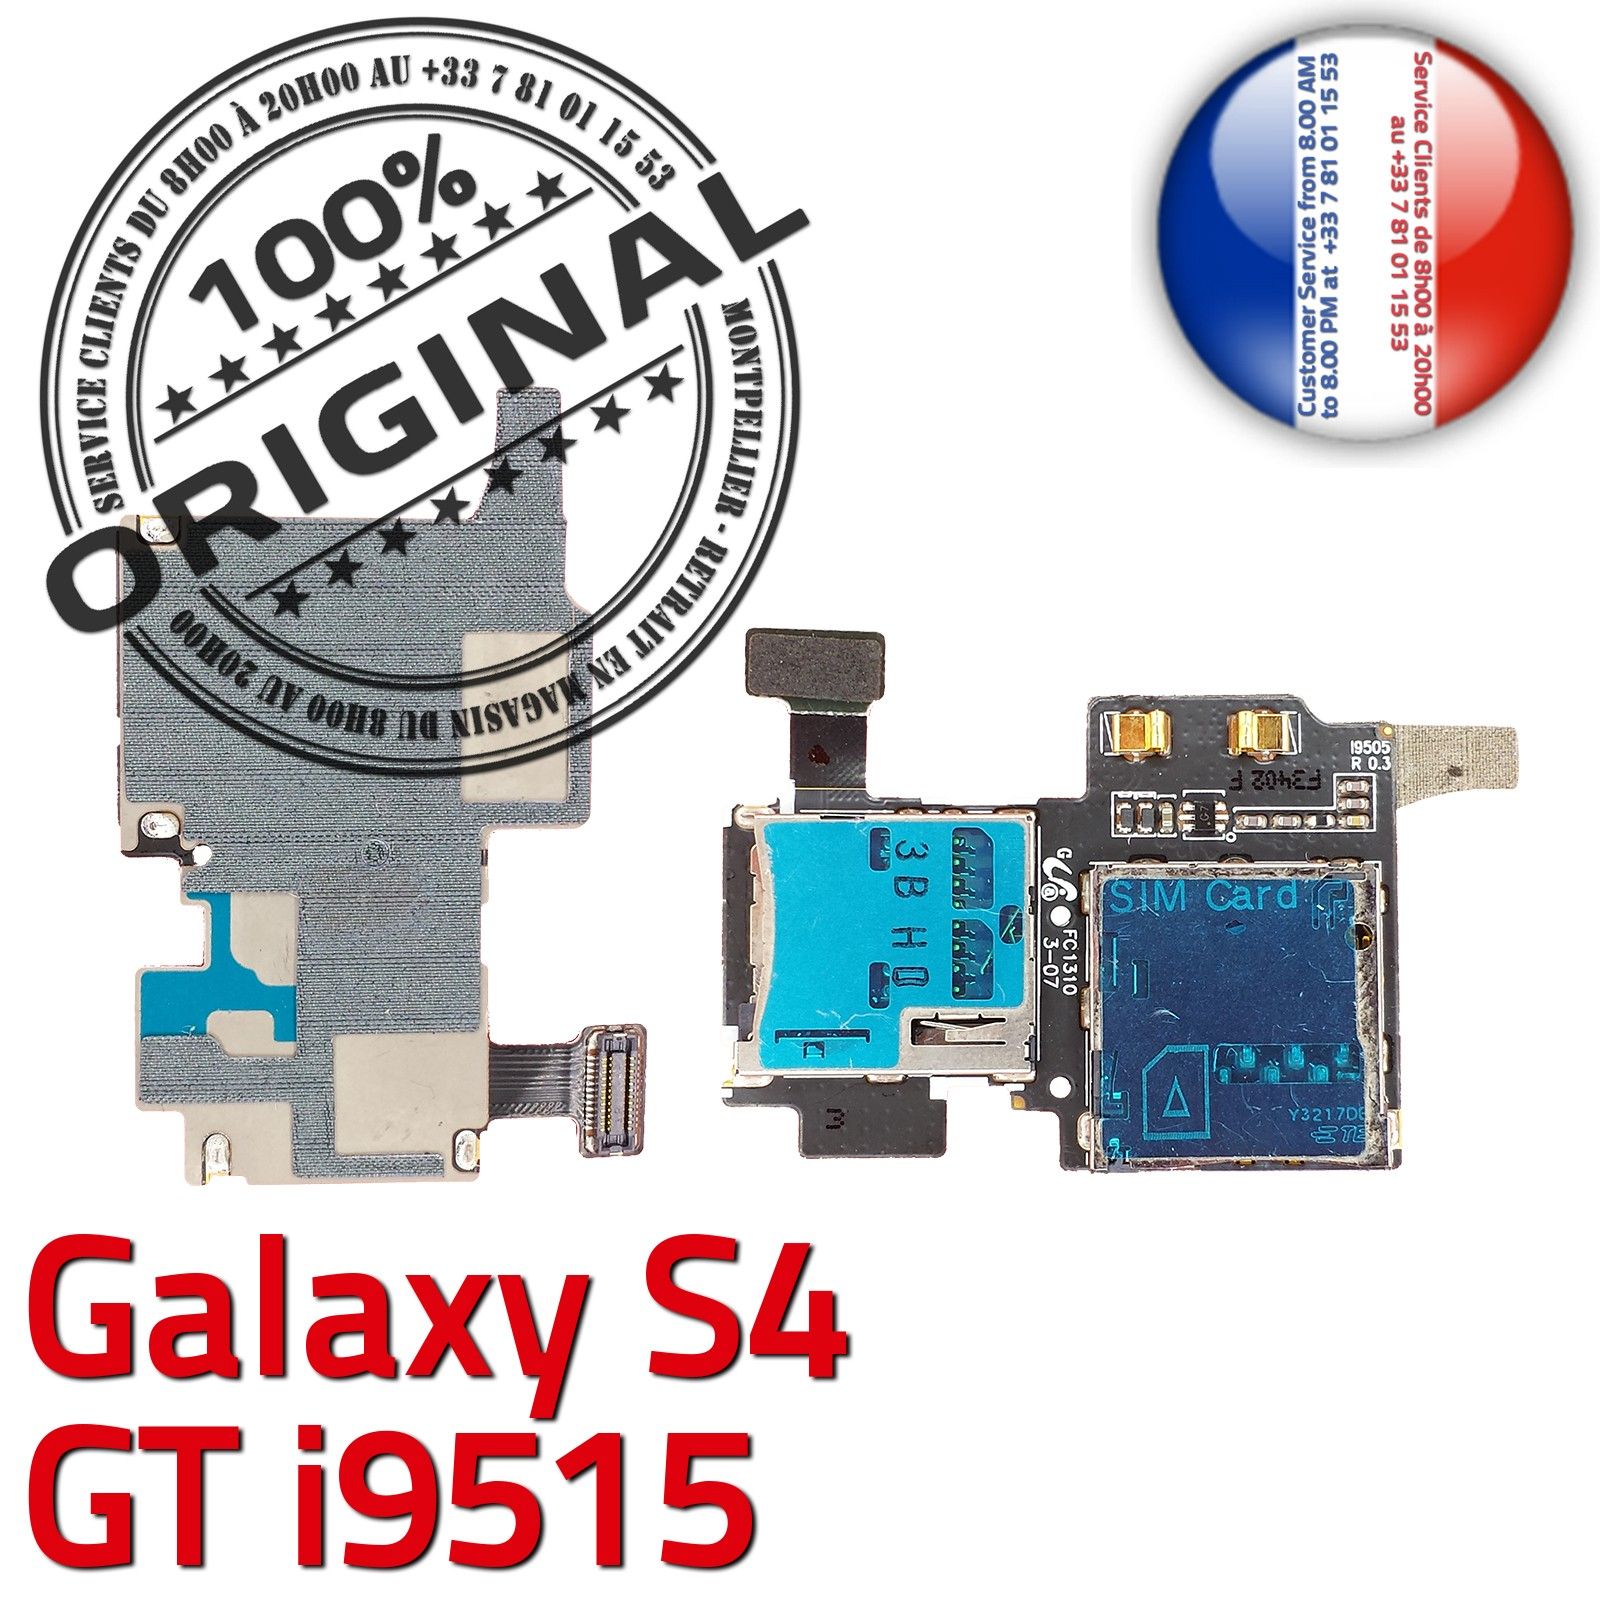 ORIGINAL Lecteur Carte Memoire Samsung Galaxy S4 GT i9506 SIM